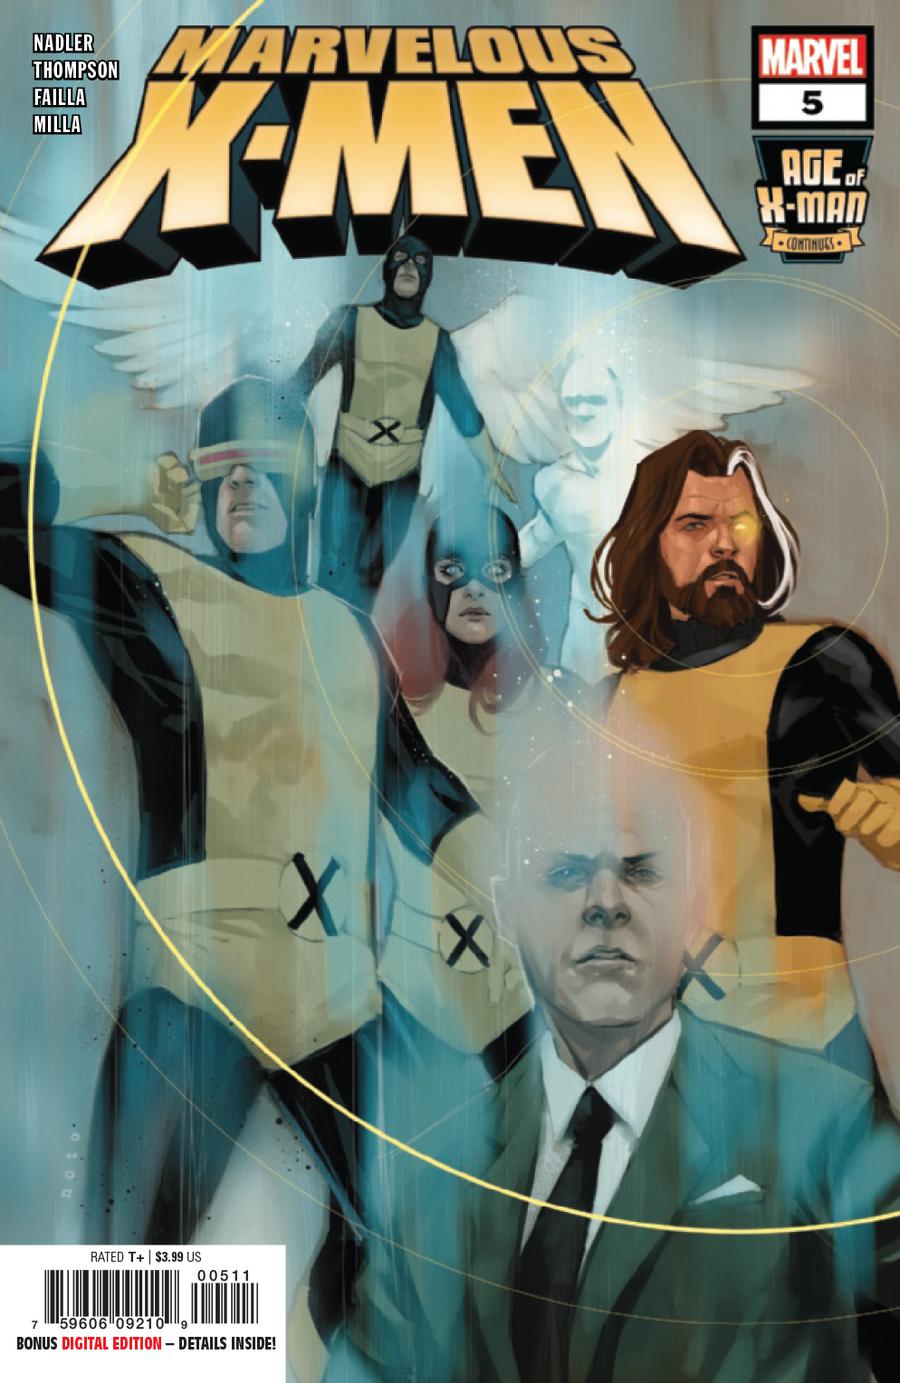 Age Of X-Man Marvelous X-Men #5